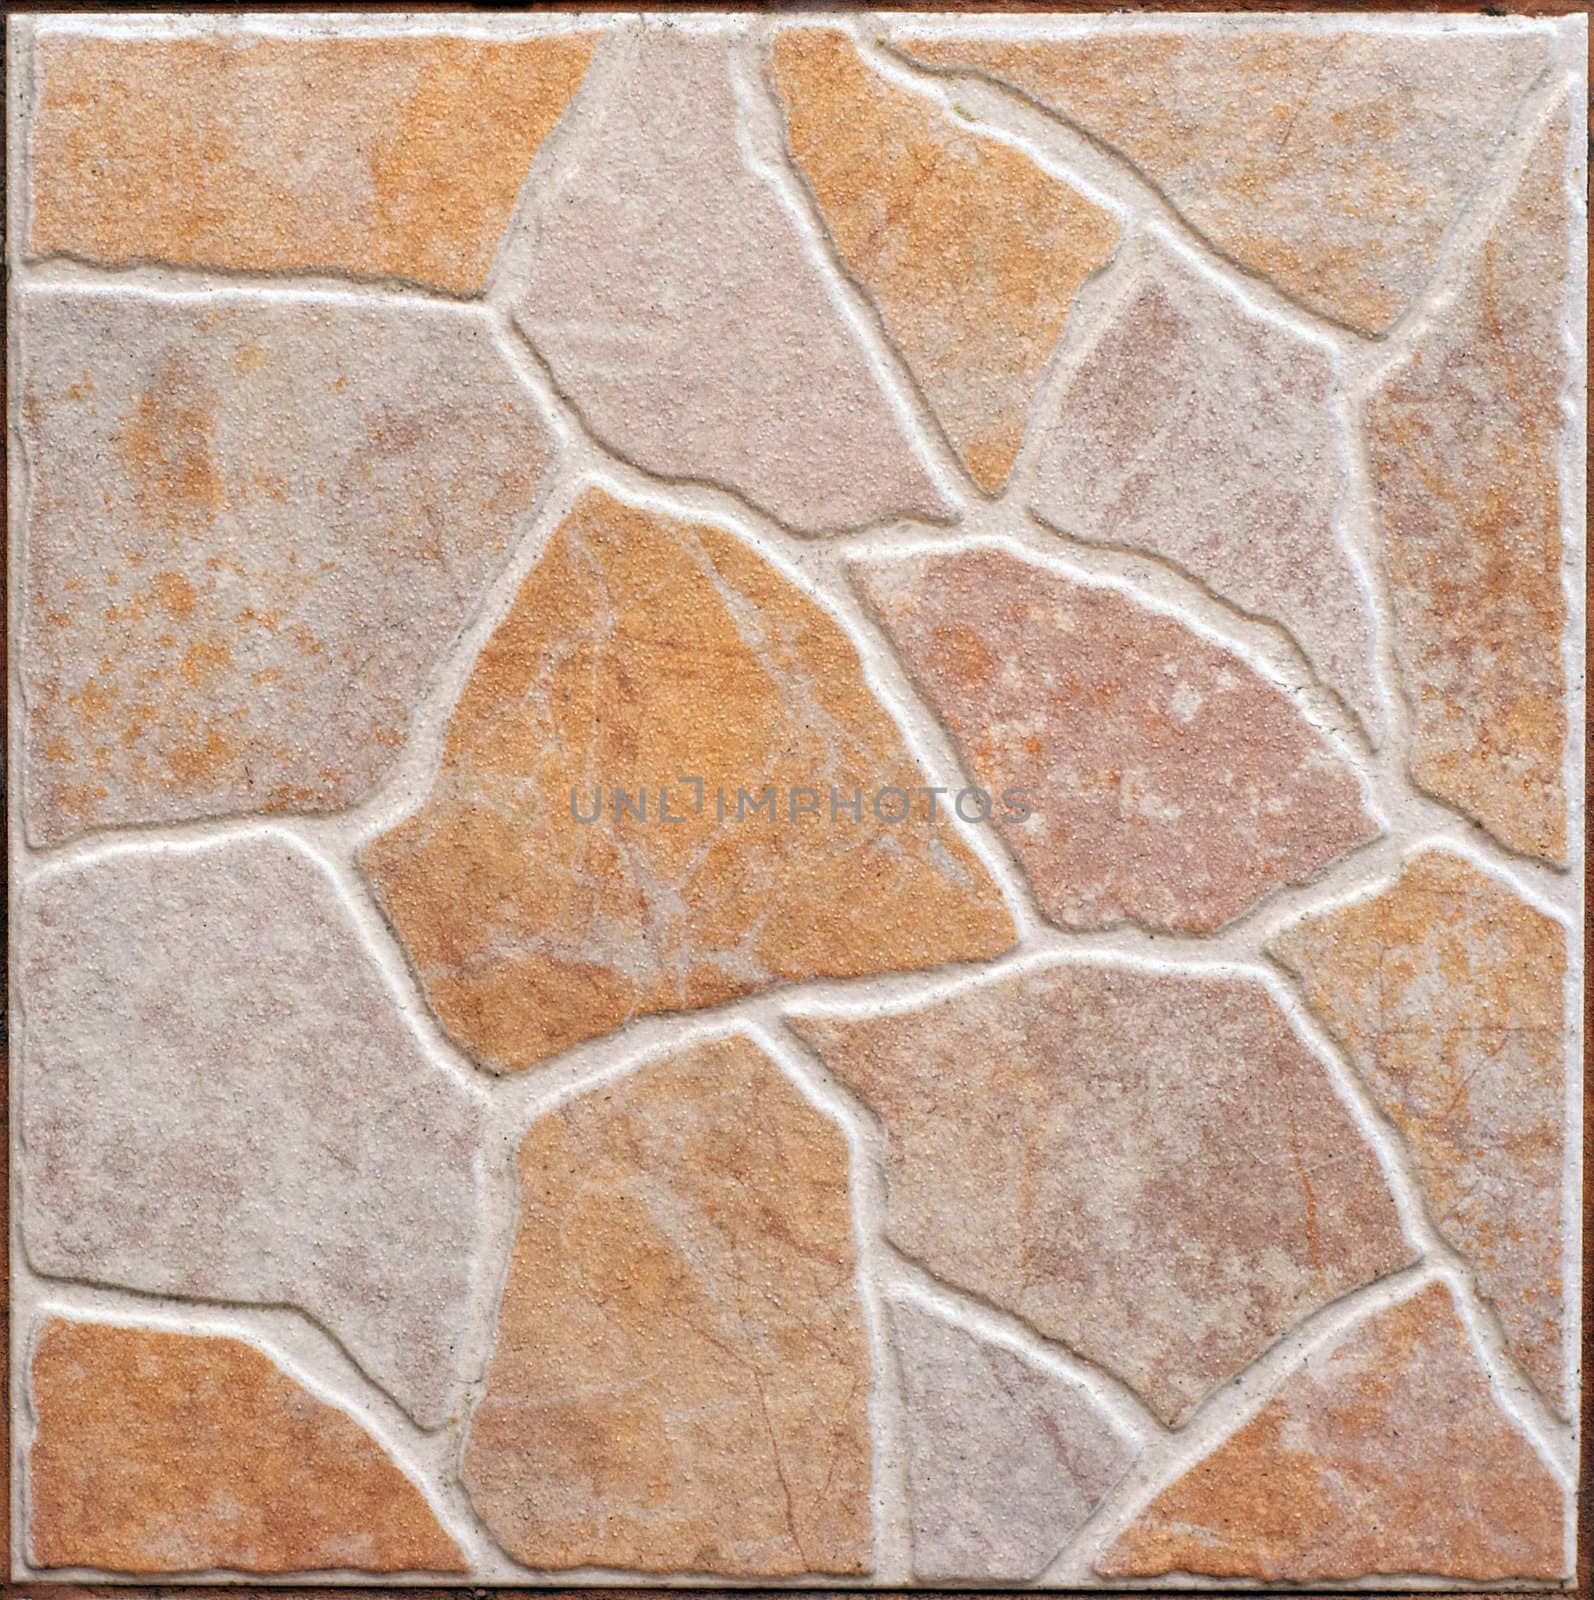 square brown decorative ceramic slab texture by starush